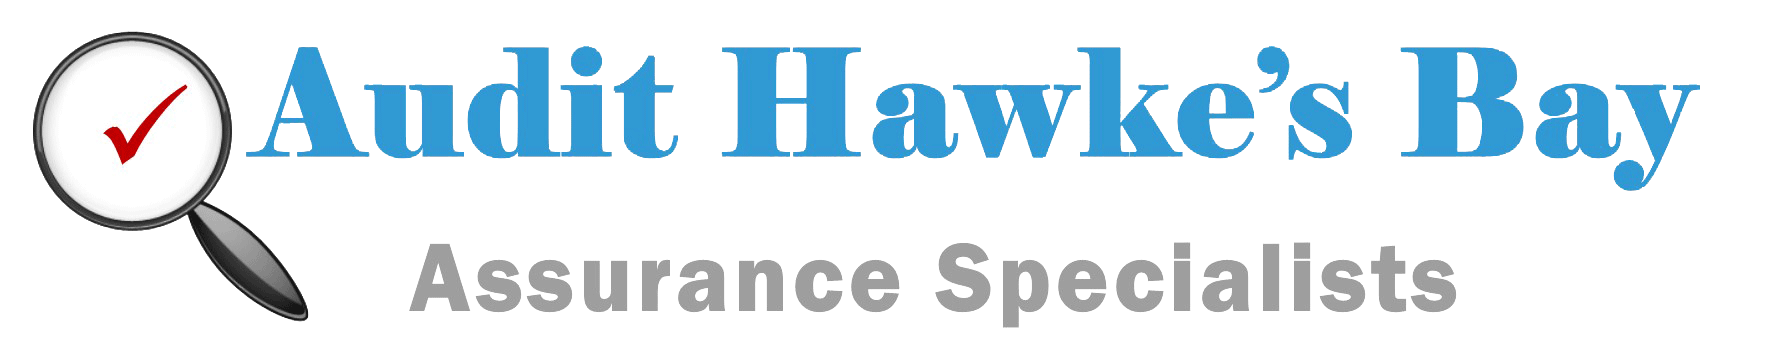 audit hawke's bay logo